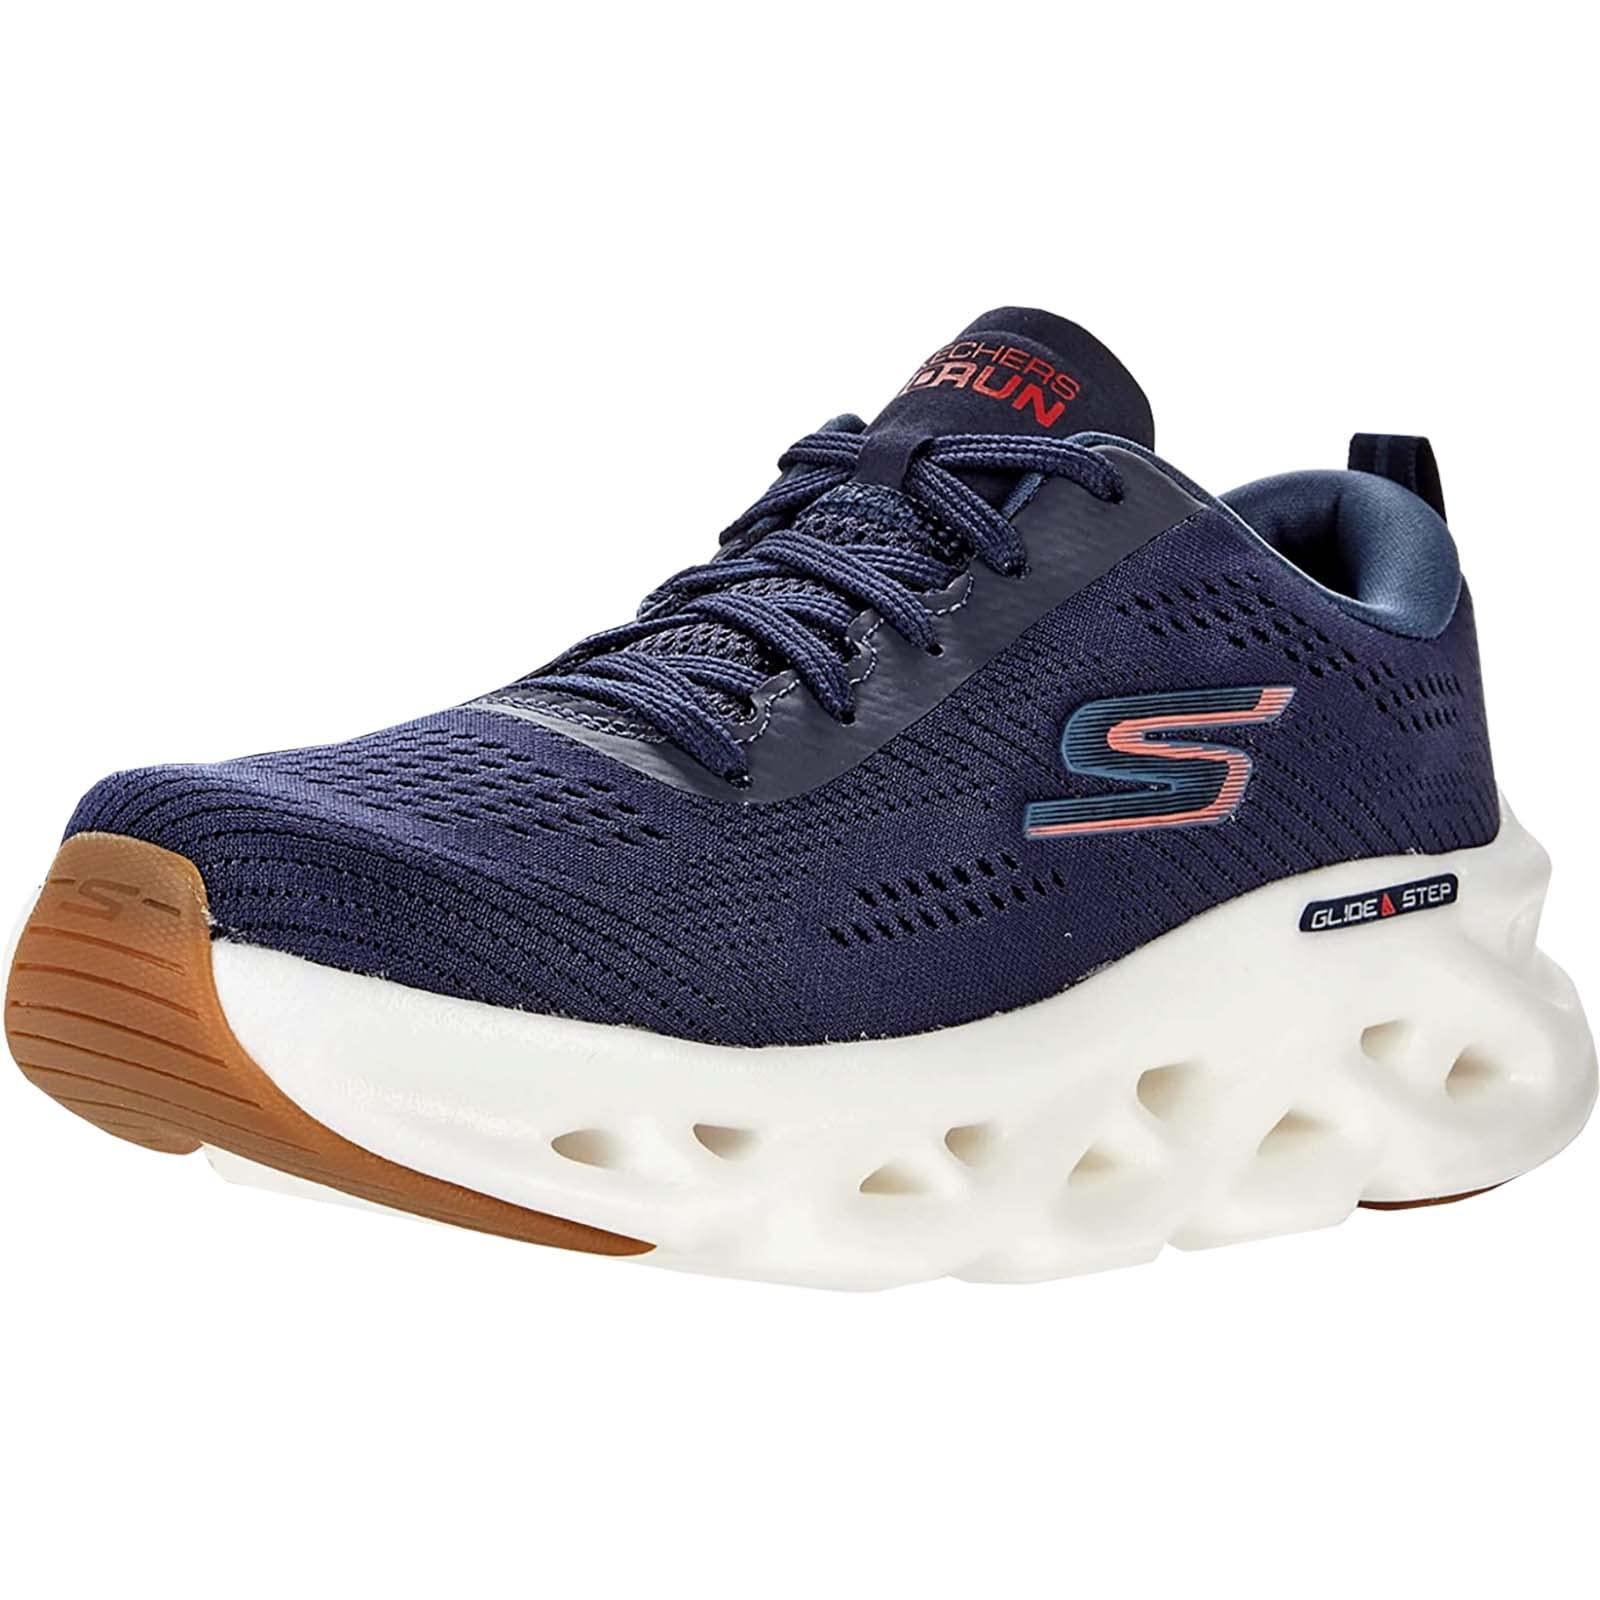 Skechers Gorun Glide-step Swirl Tech-max Athletic Workout Running Walking Shoes Sneaker in Blue for Men | Lyst